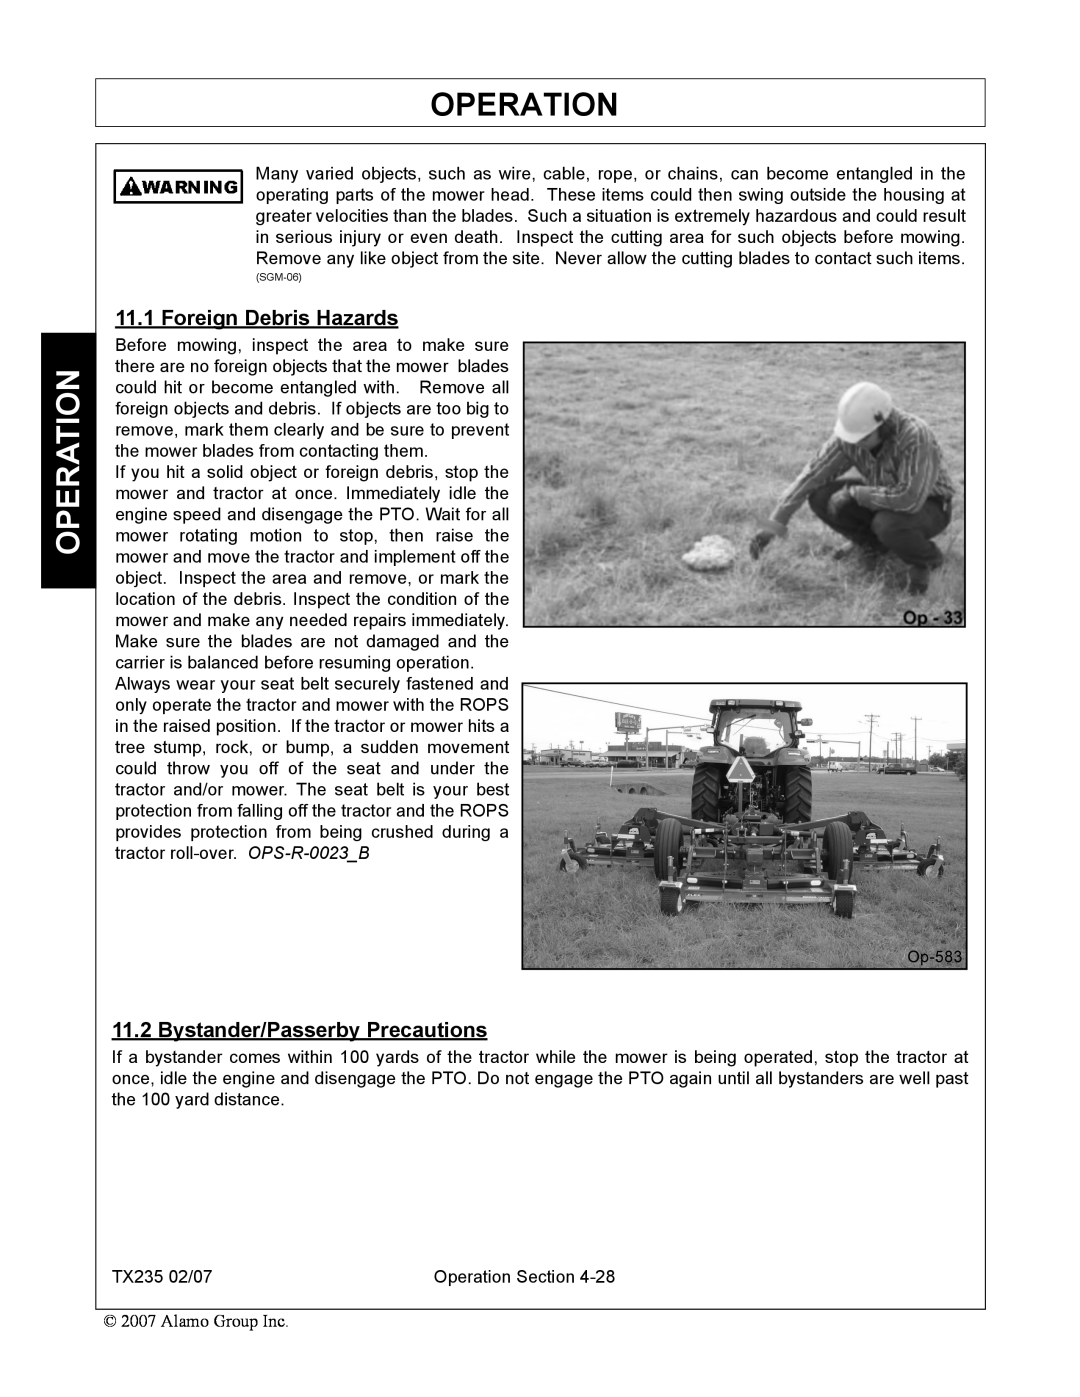 Alamo TX235 manual Foreign Debris Hazards, Bystander/Passerby Precautions, Operation 